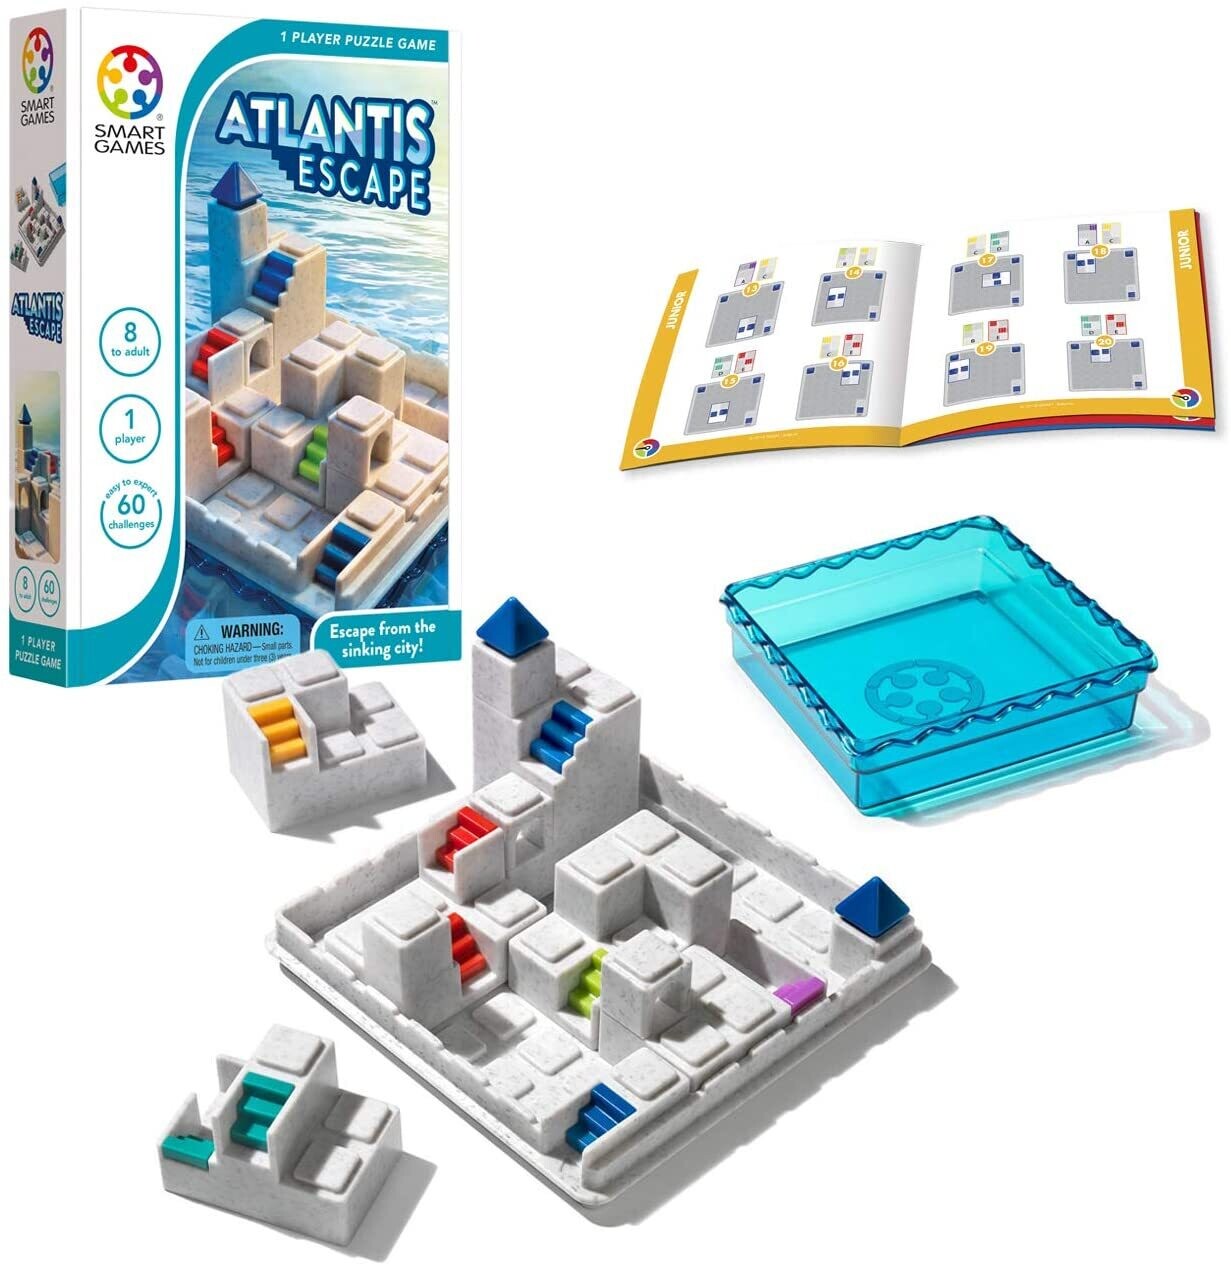 Smart Games Atlantis Escape Logic Game (for ages 8+)